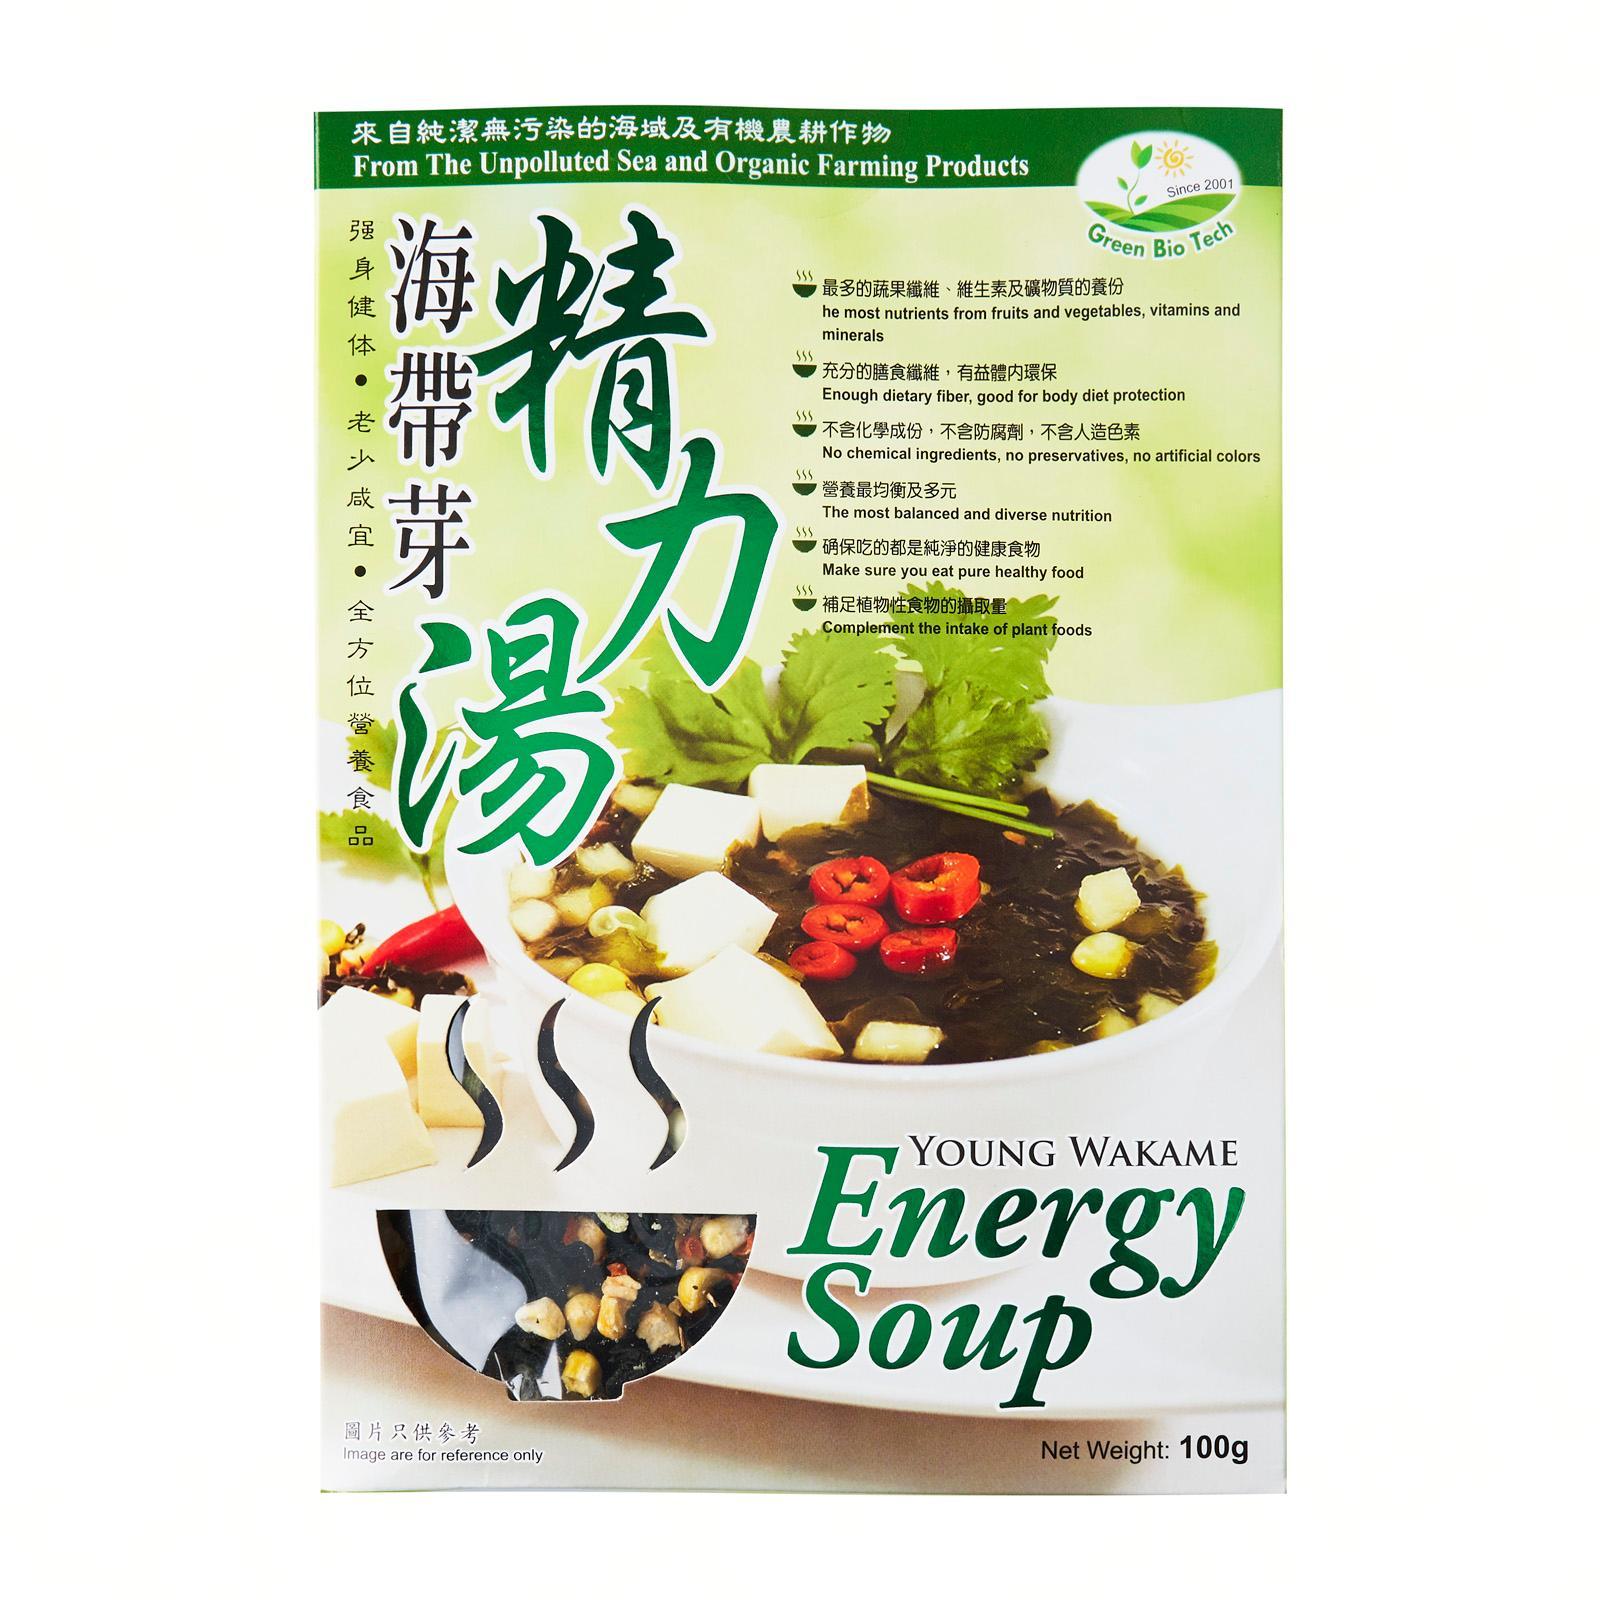 Young Wakame Energy Soup